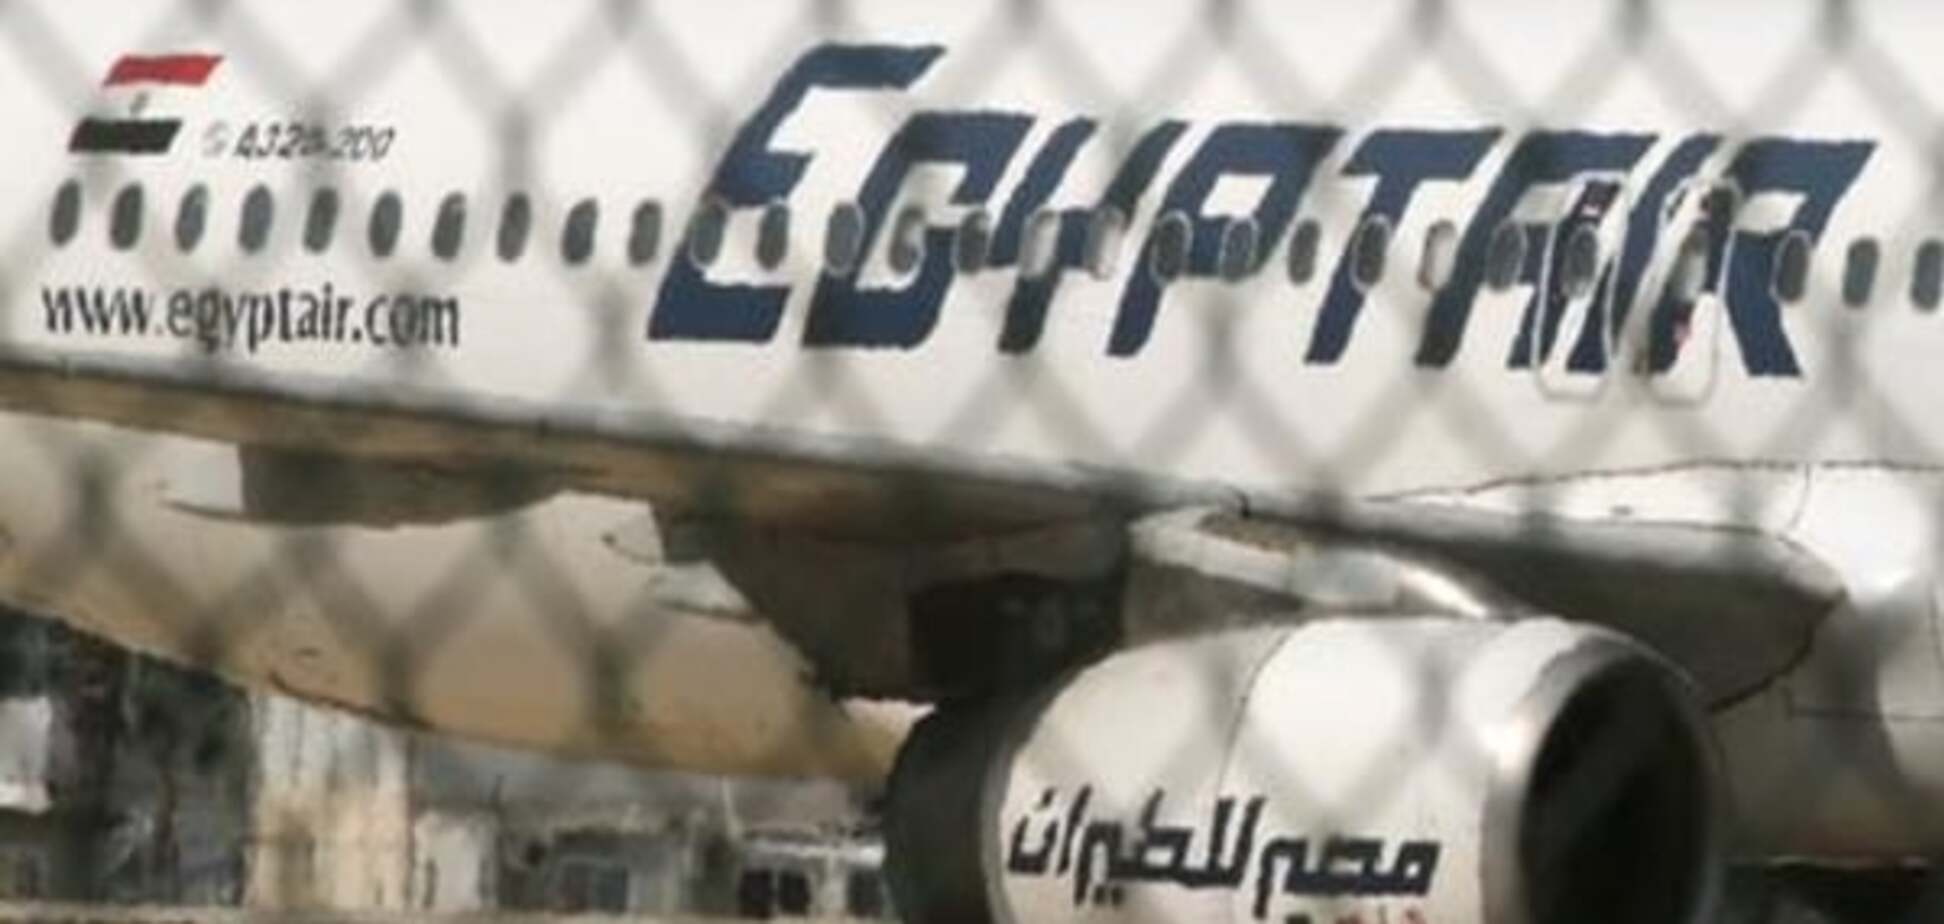 +++ Літак EgyptAir впав у Середземне море +++